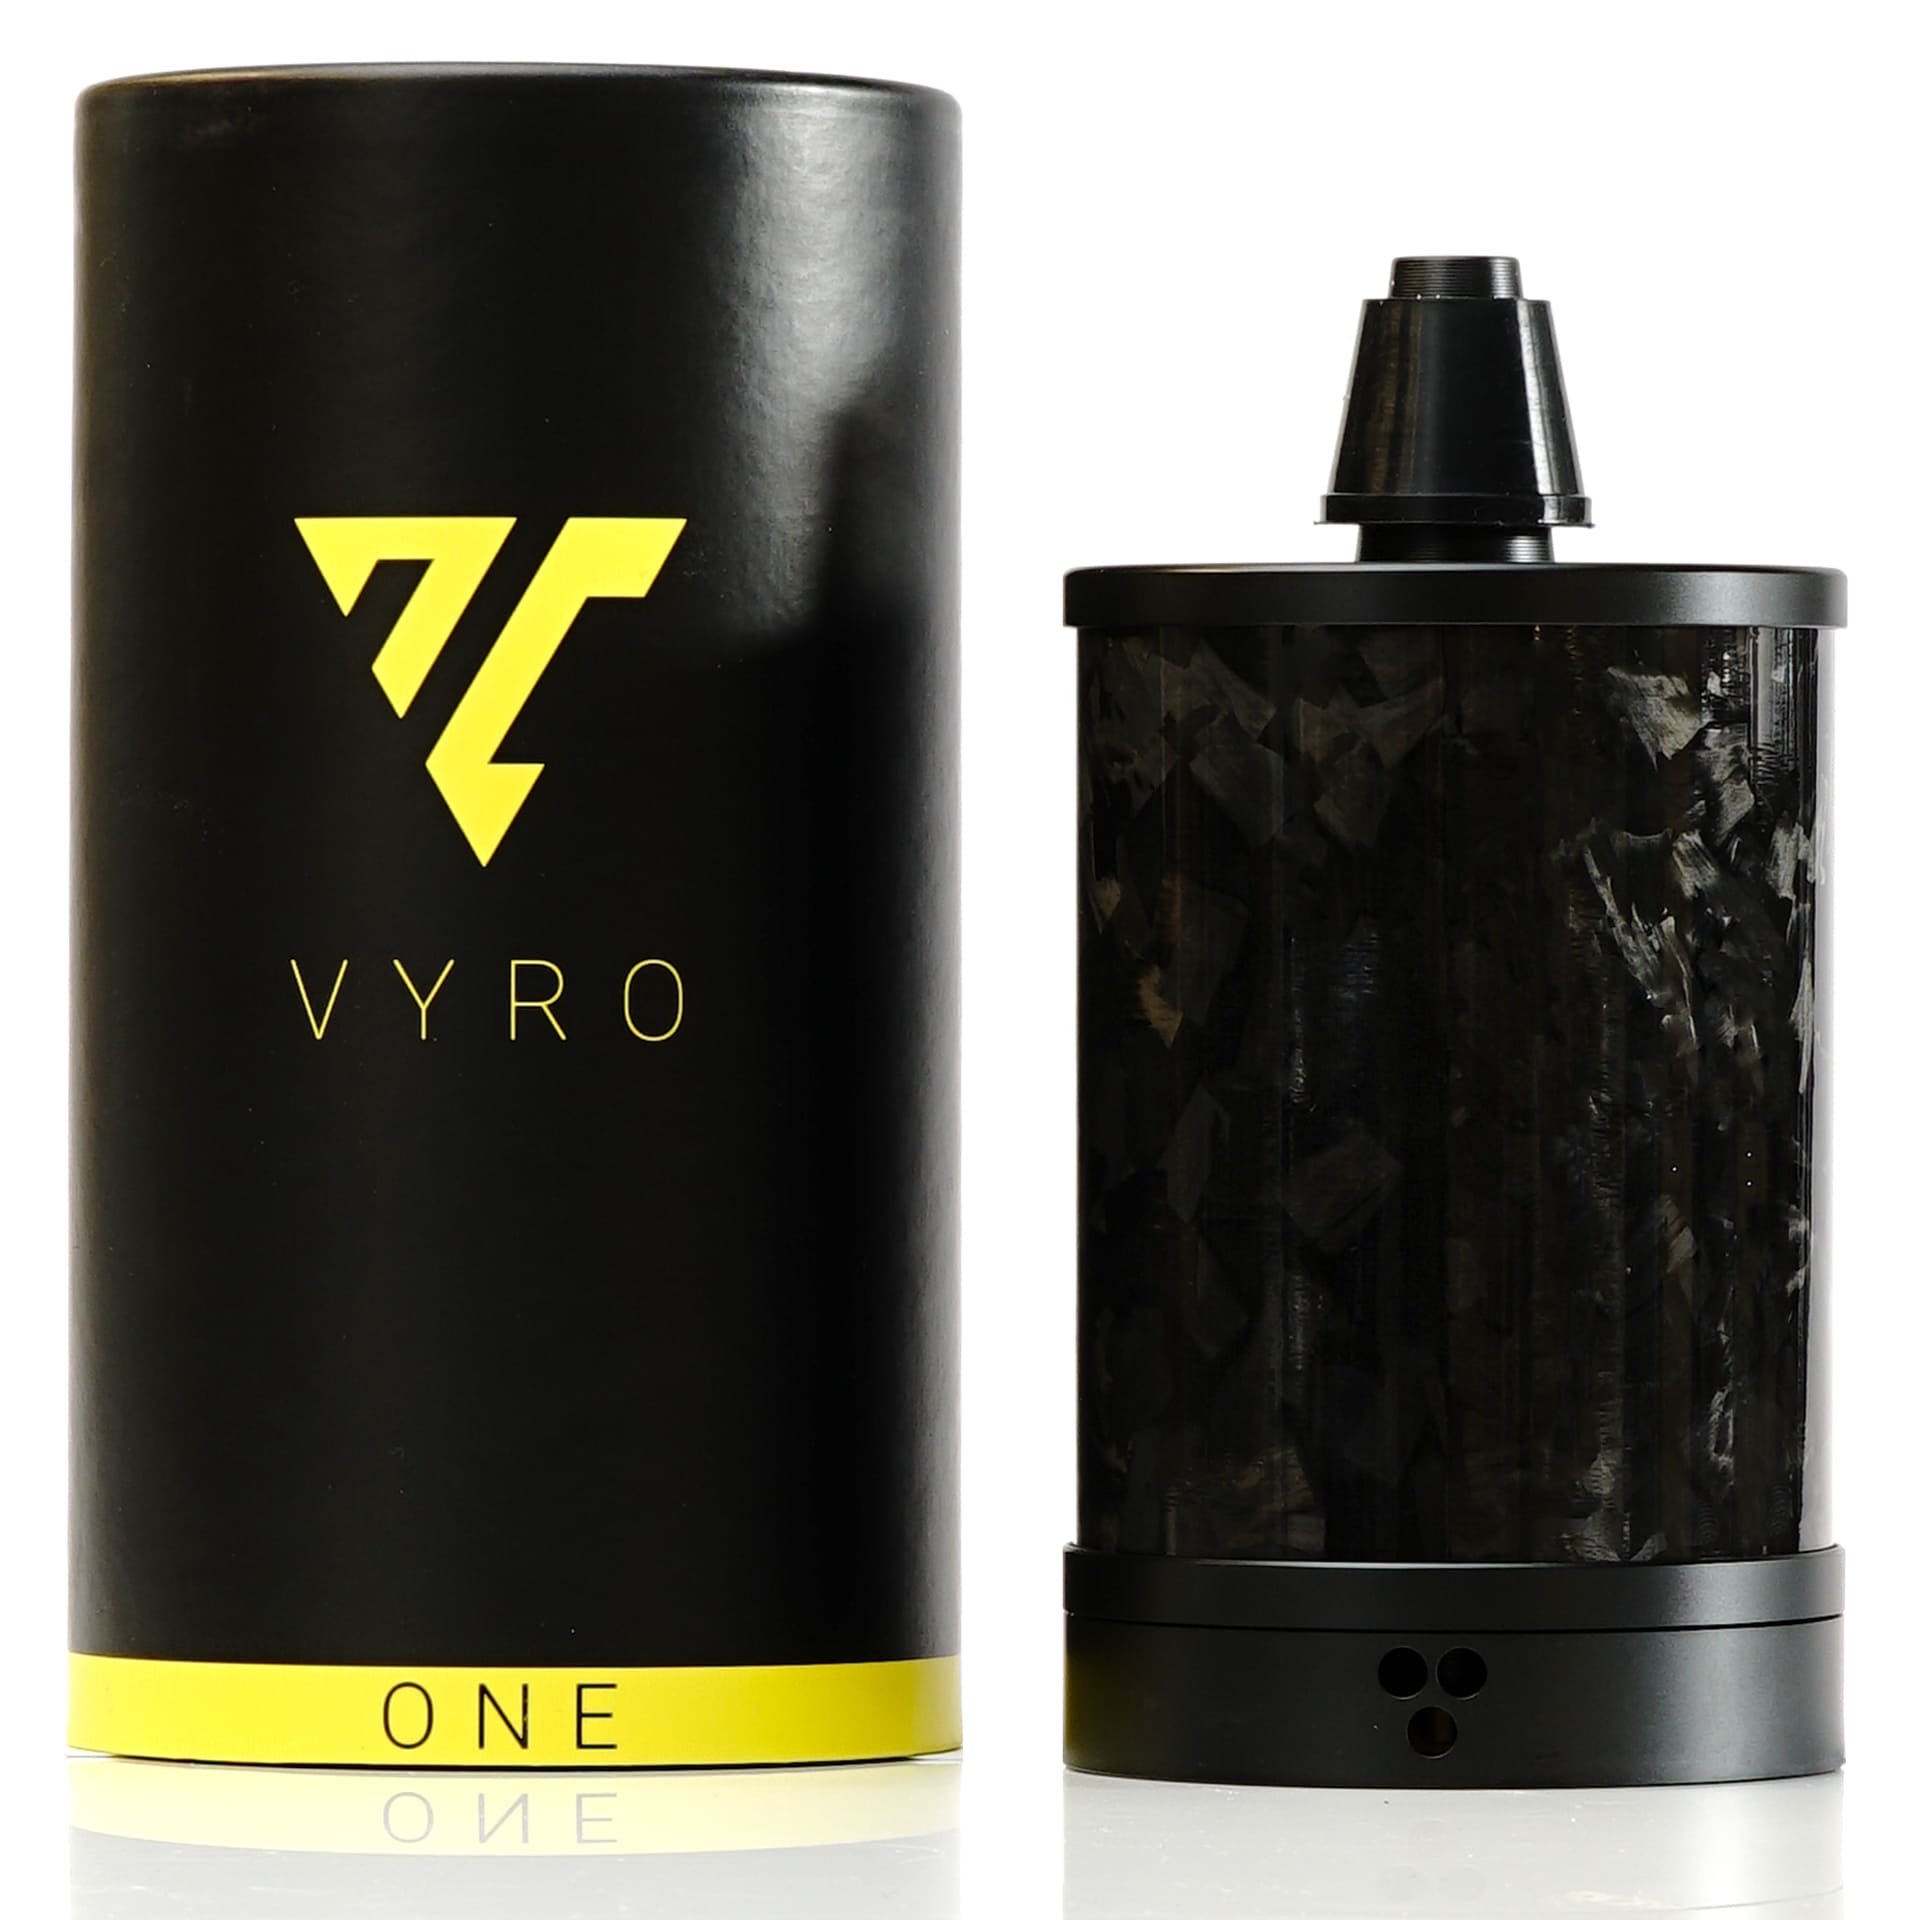 Vyro / One / Forged Black